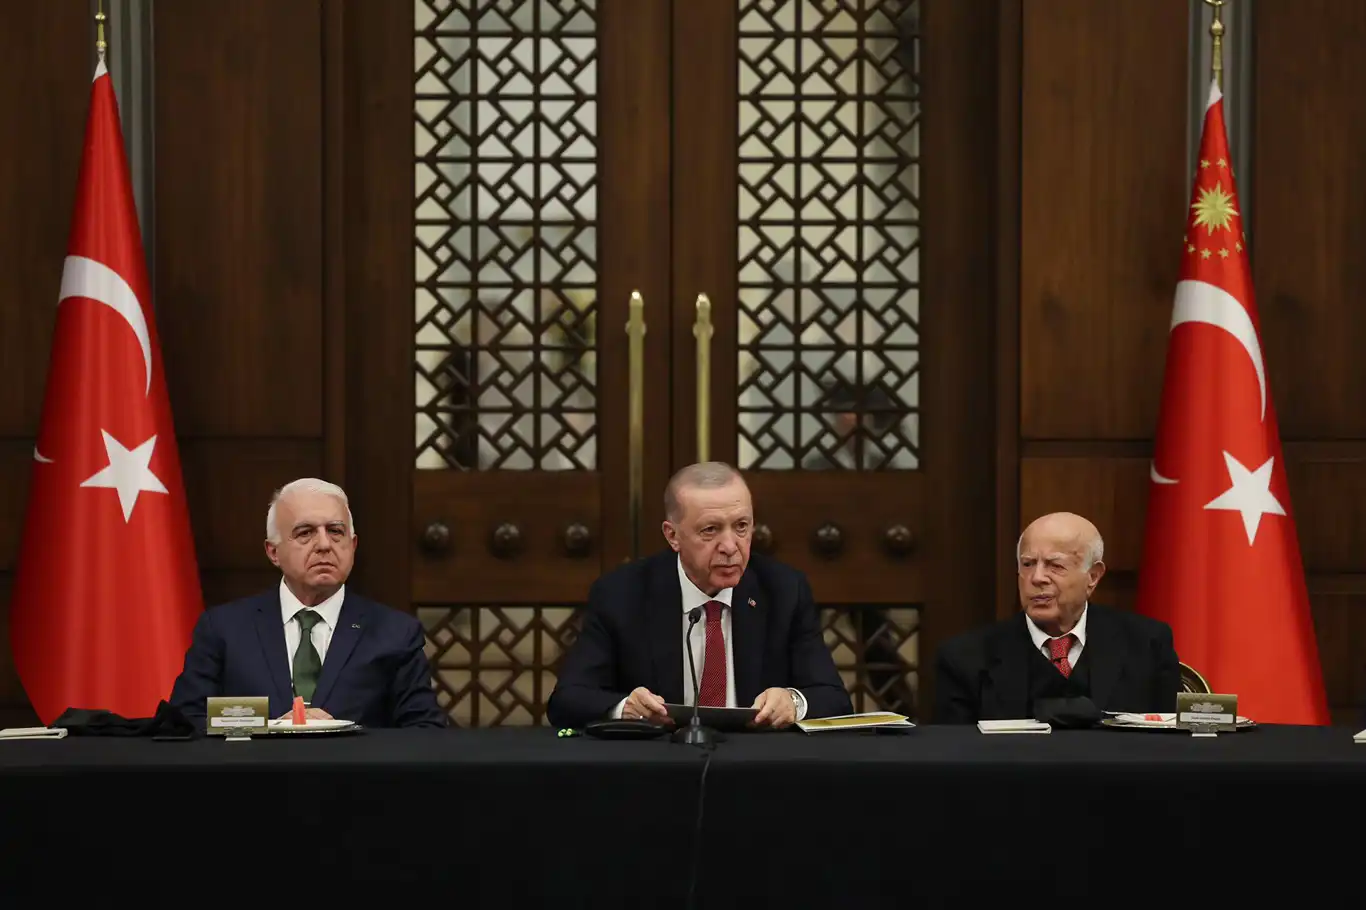 Erdoğan emphasizes Ahl al-Bayt's role in national unity at Muharram iftar